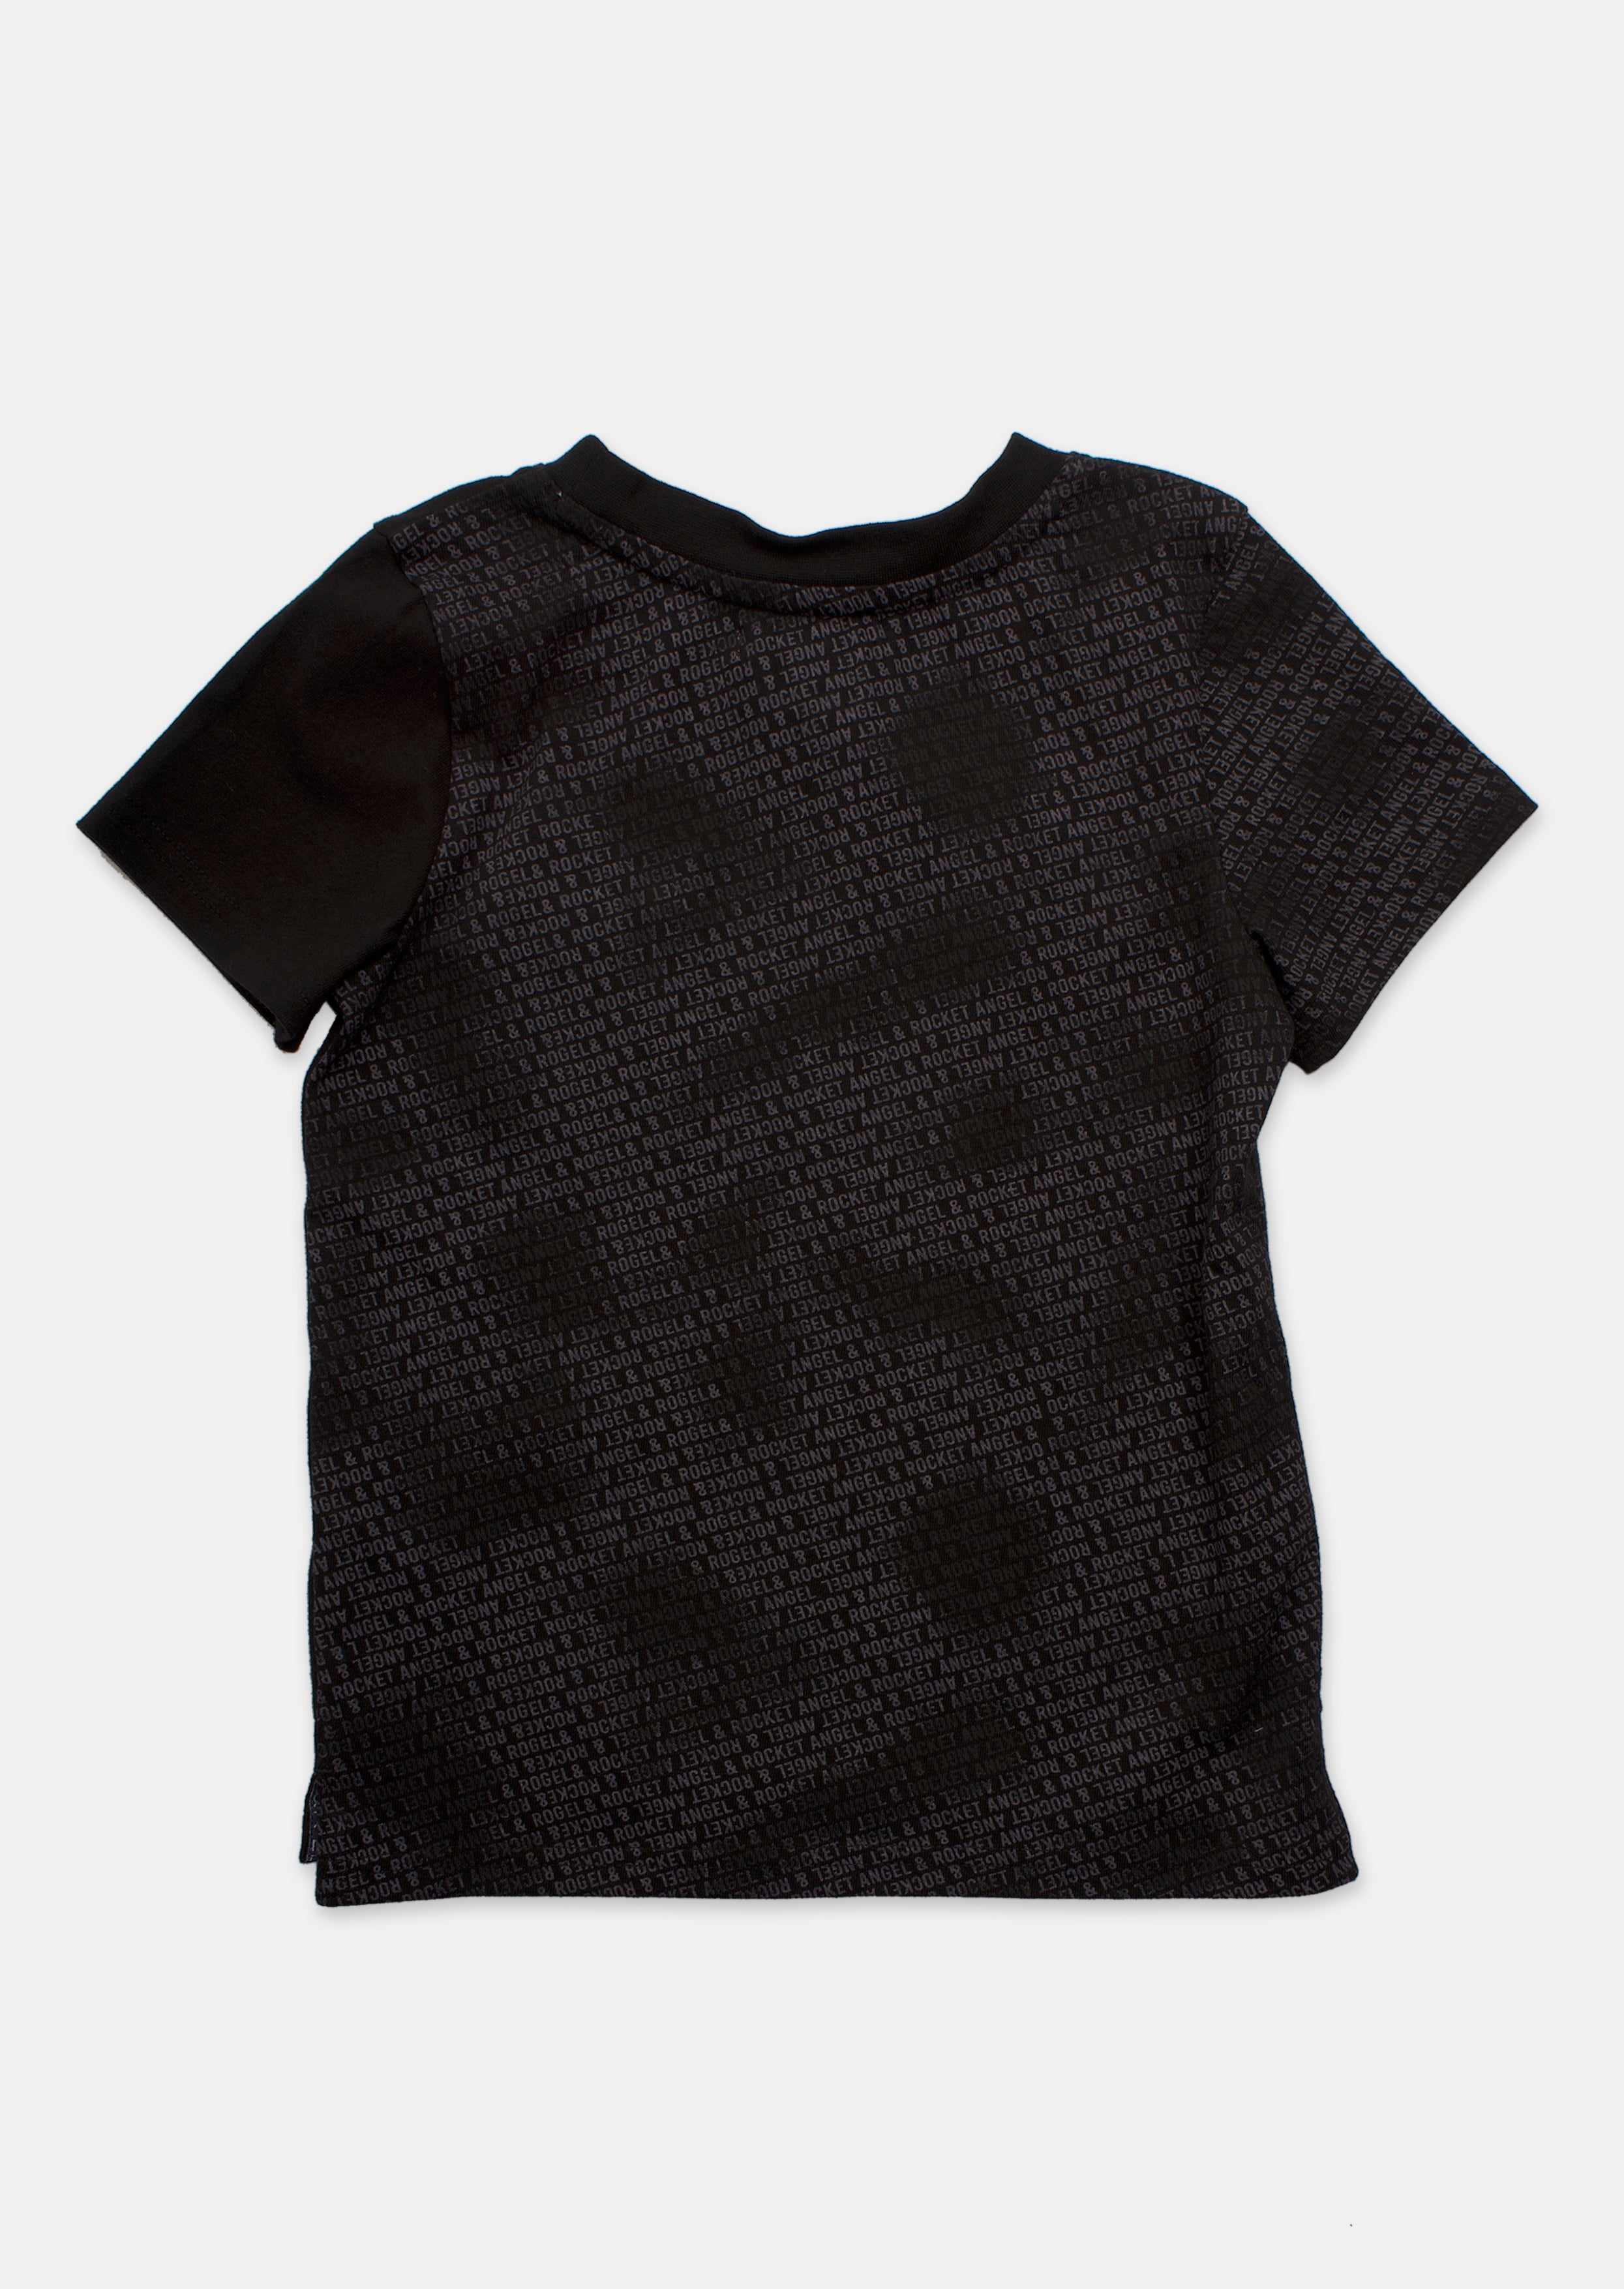 Boys Colour Block Printed Black T-Shirt with Pocket